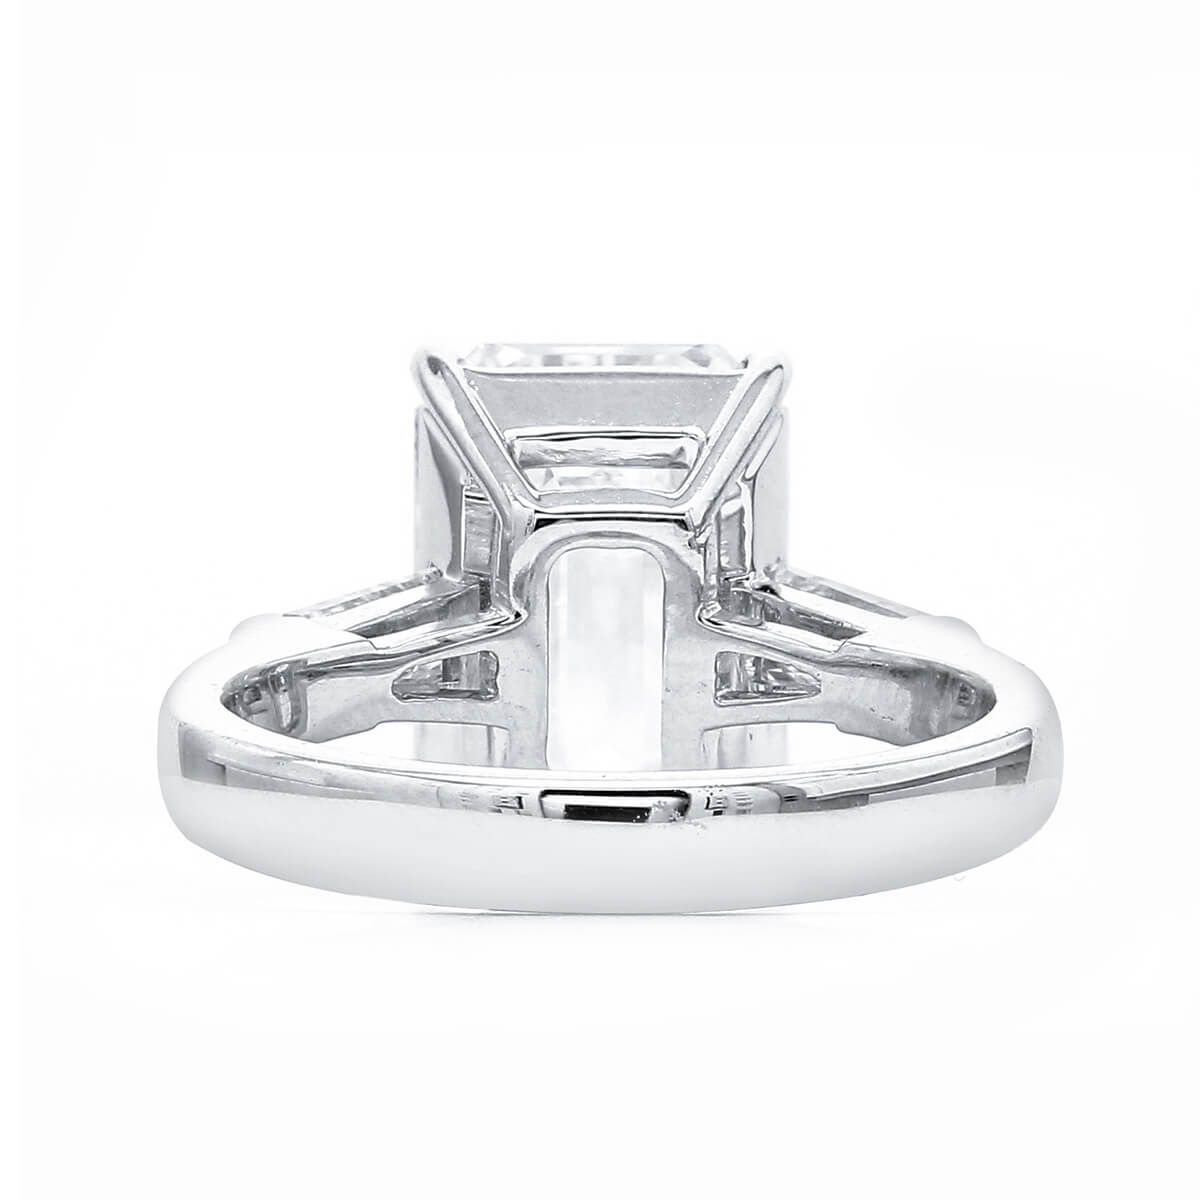  White Diamond Ring, 0.64 Carat, Emerald shape, GIA Certified, 6193092950